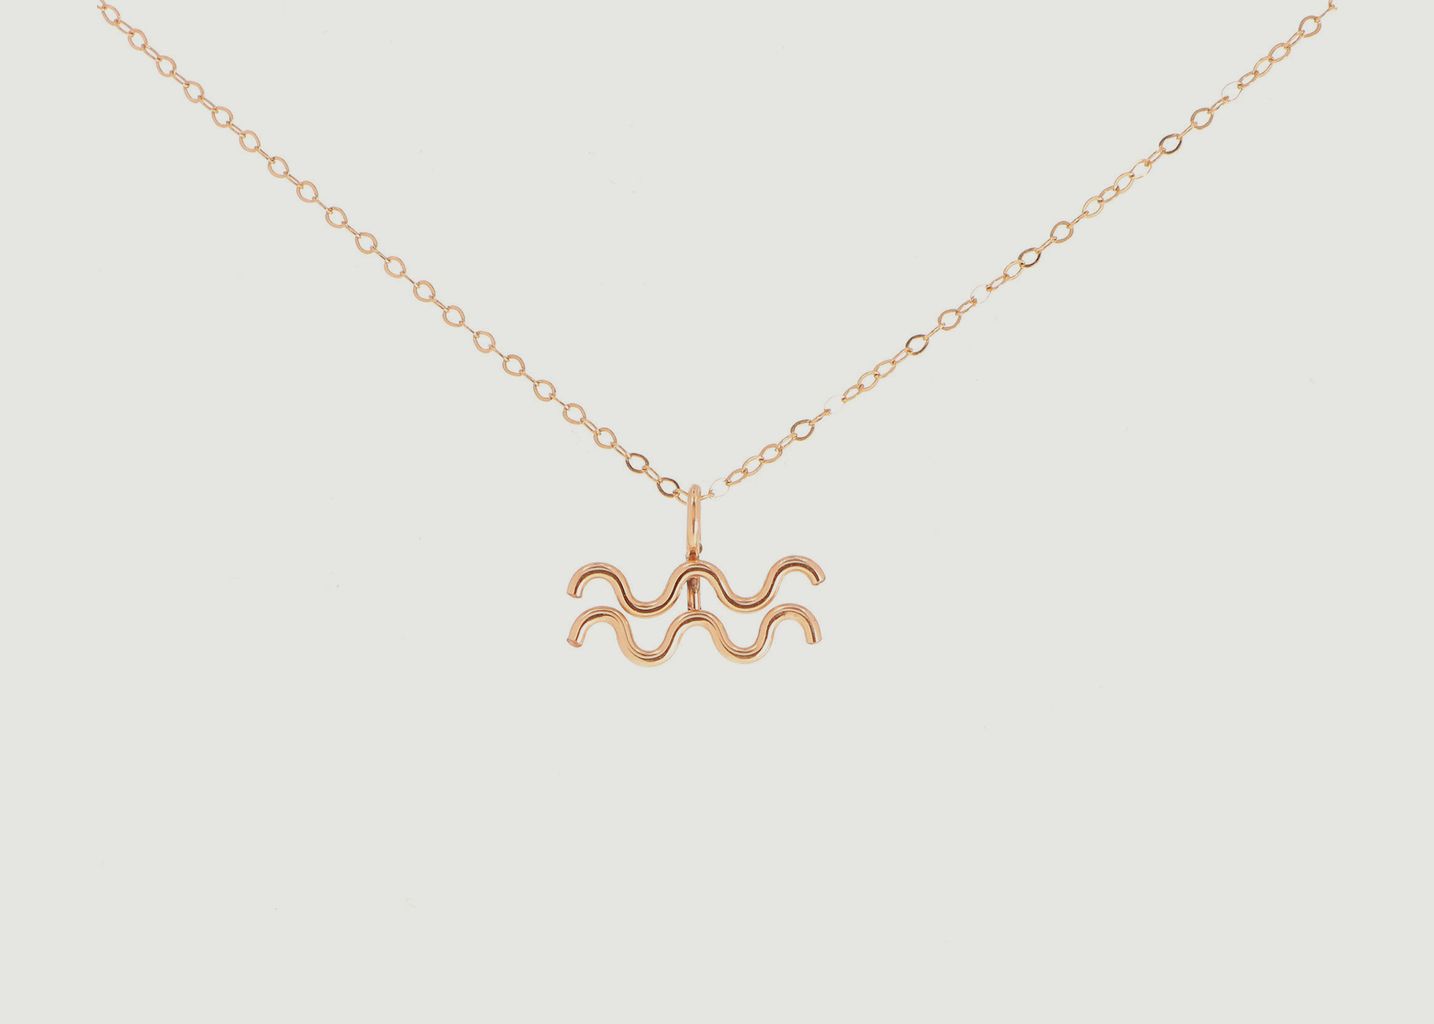 Astro Verseau chain necklace with pendant - Atelier Paulin